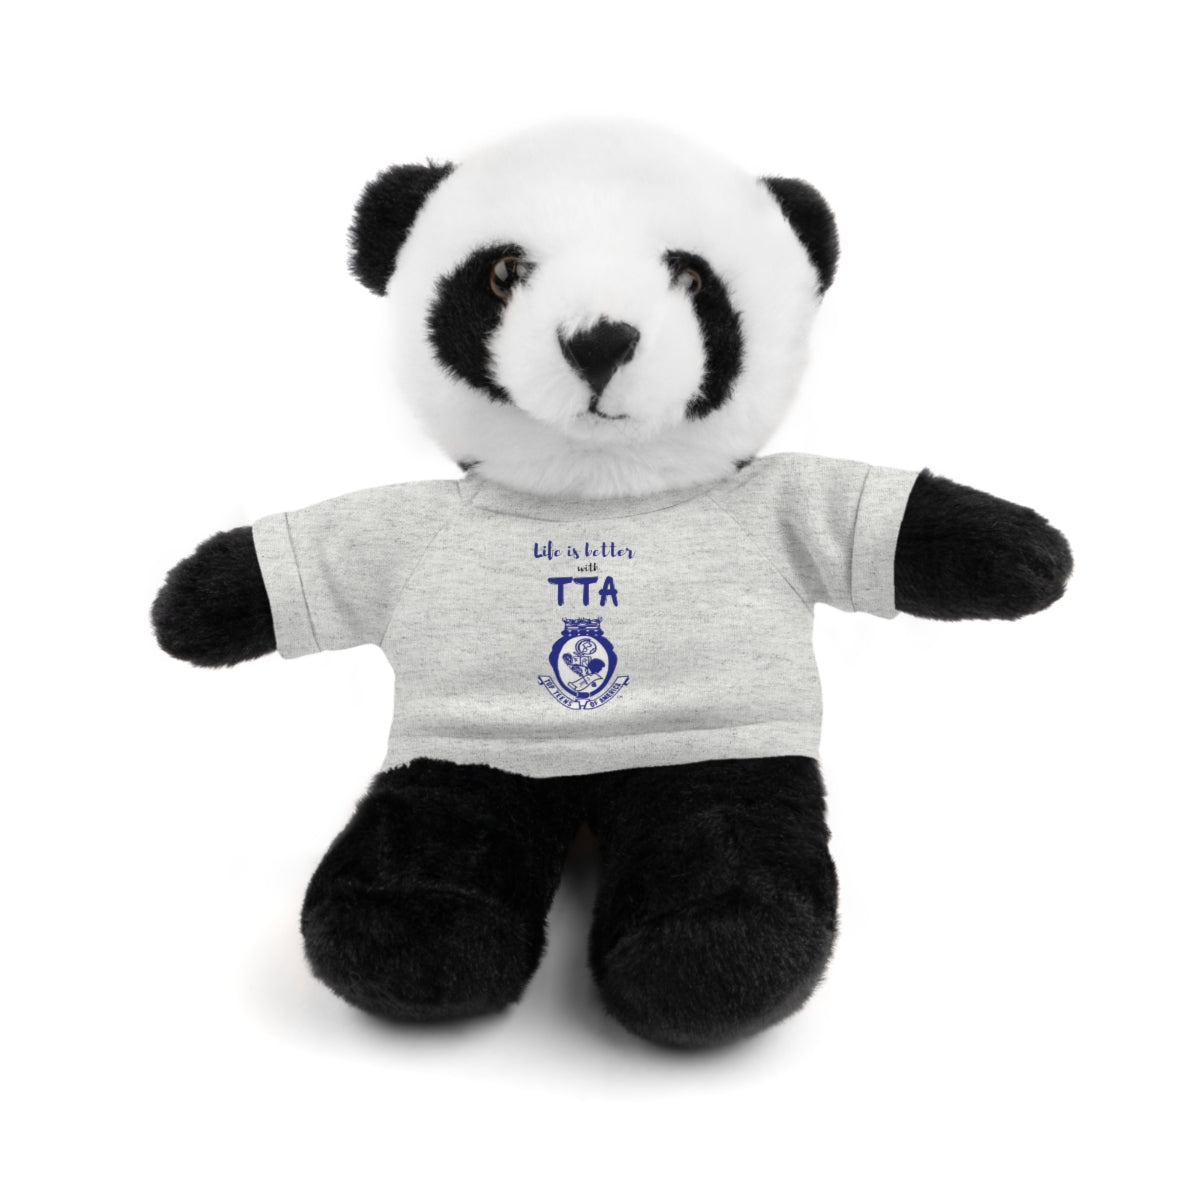 TTA (Life Is Better) Stuffed Animals with Tee